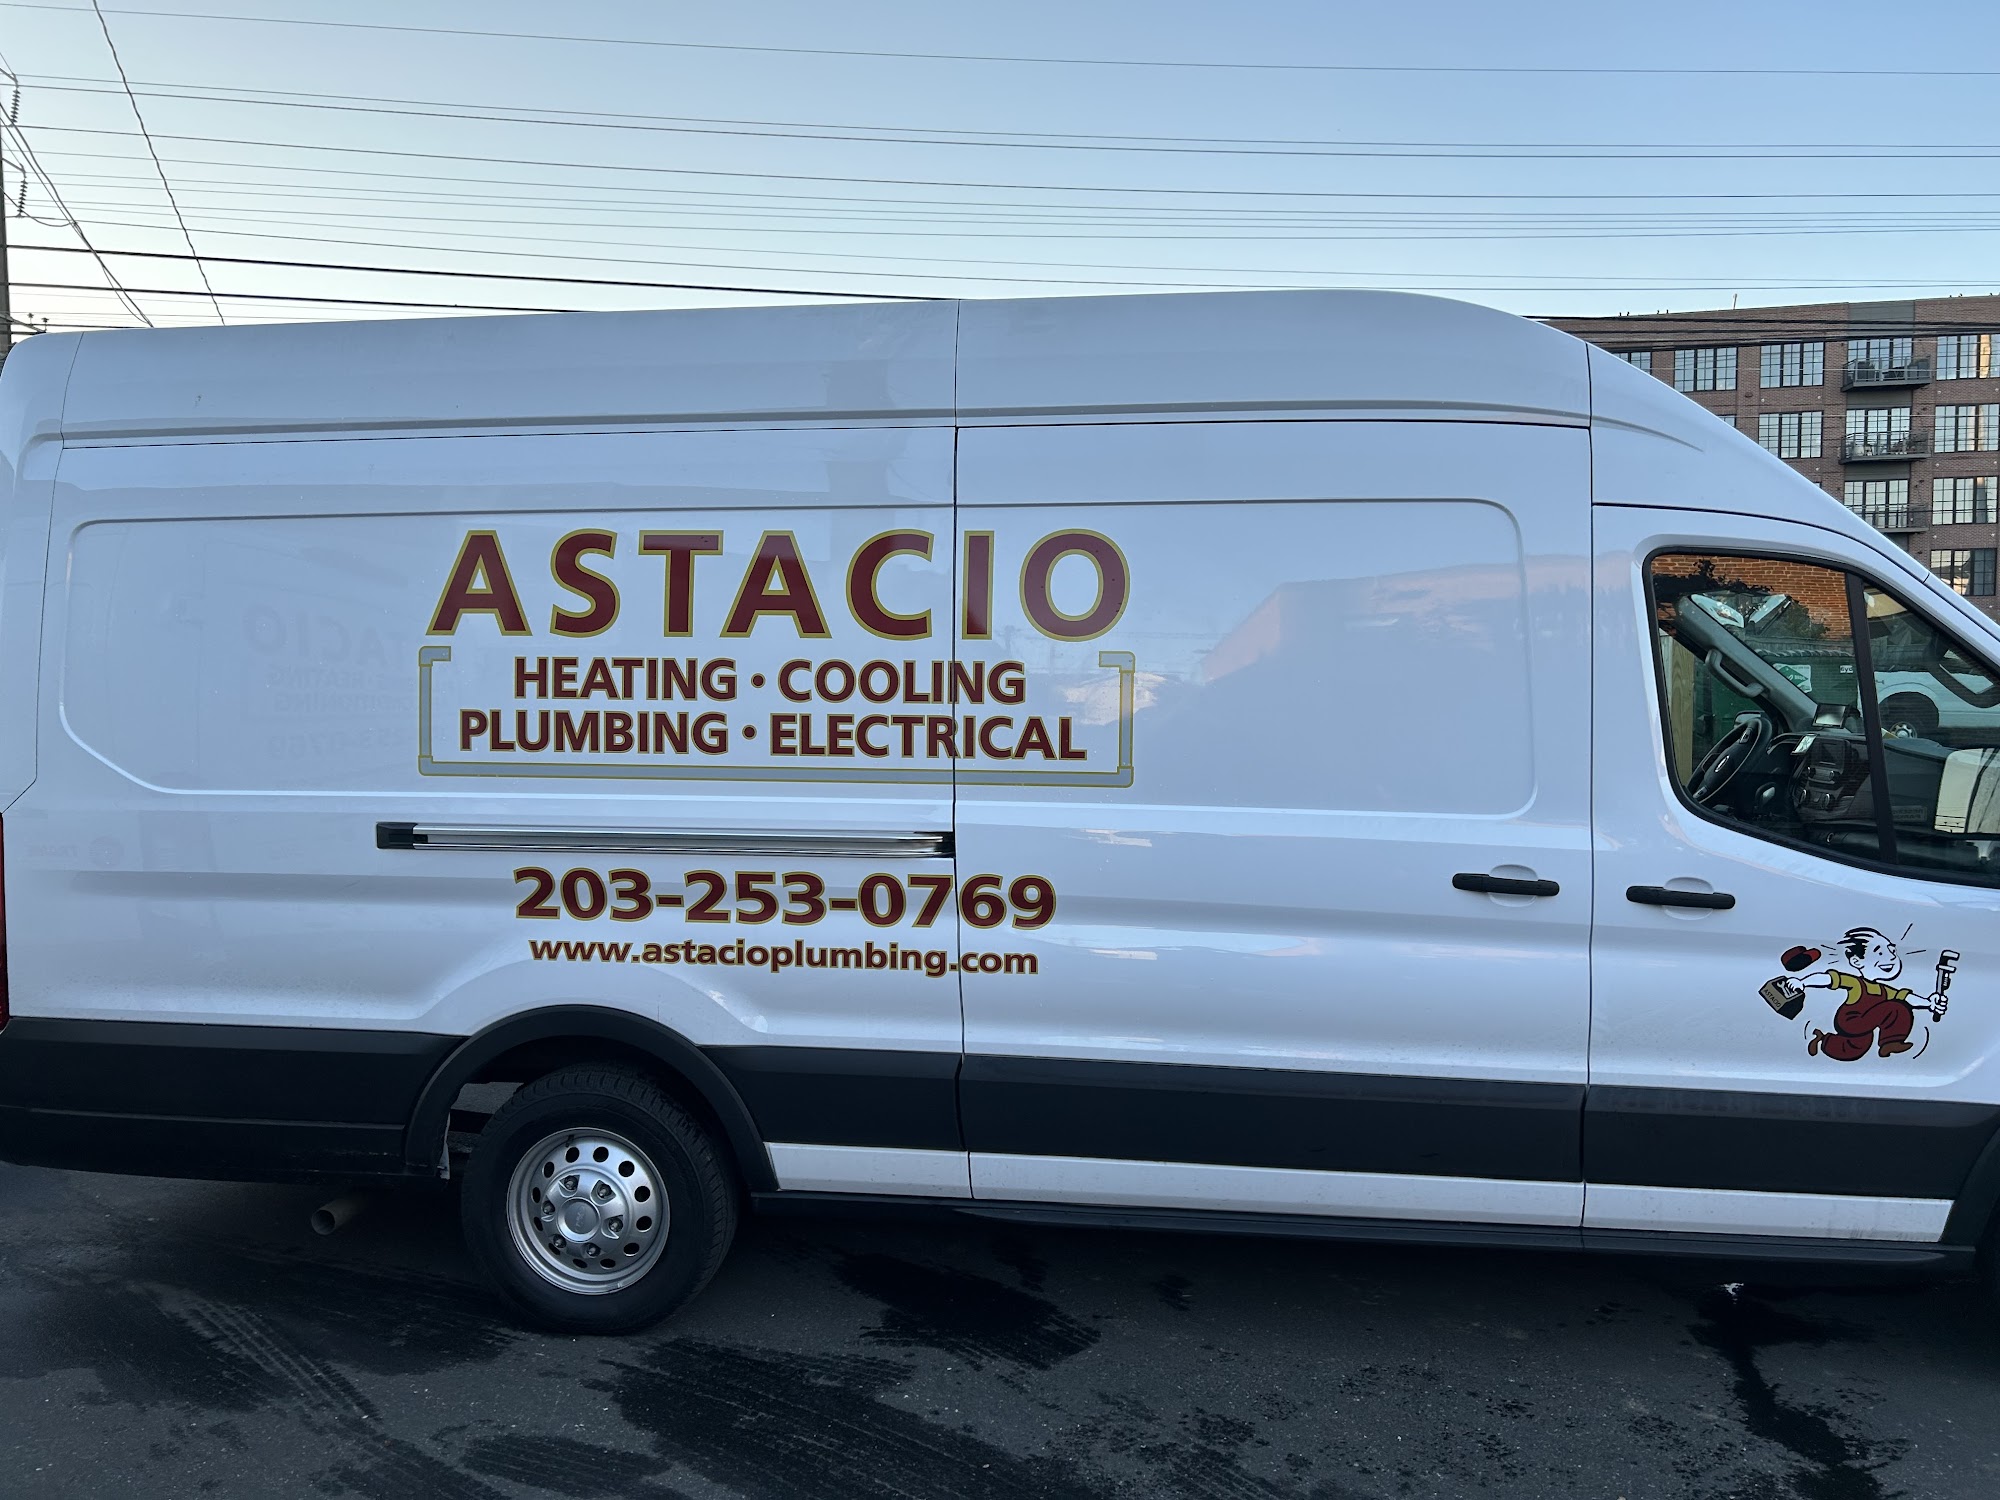 Astacio Heating, Cooling, Plumbing & Electrical